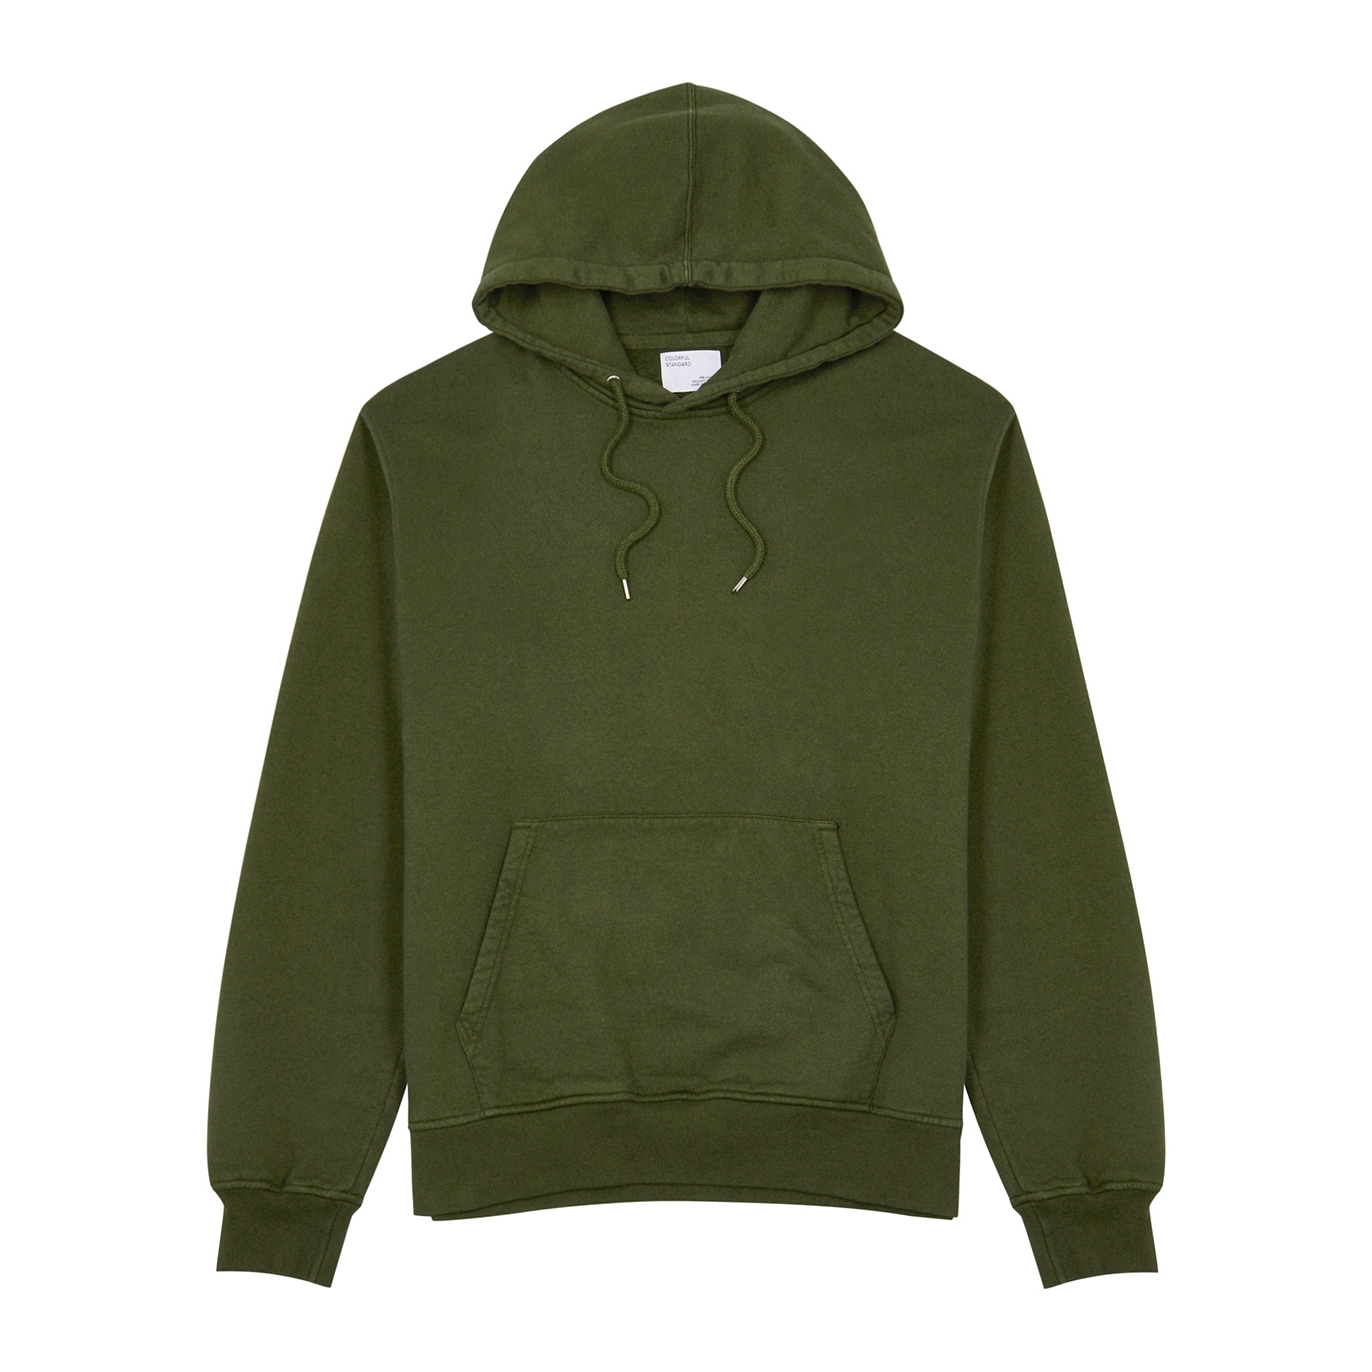 Colorful Standard Green Hooded Cotton Sweatshirt - M